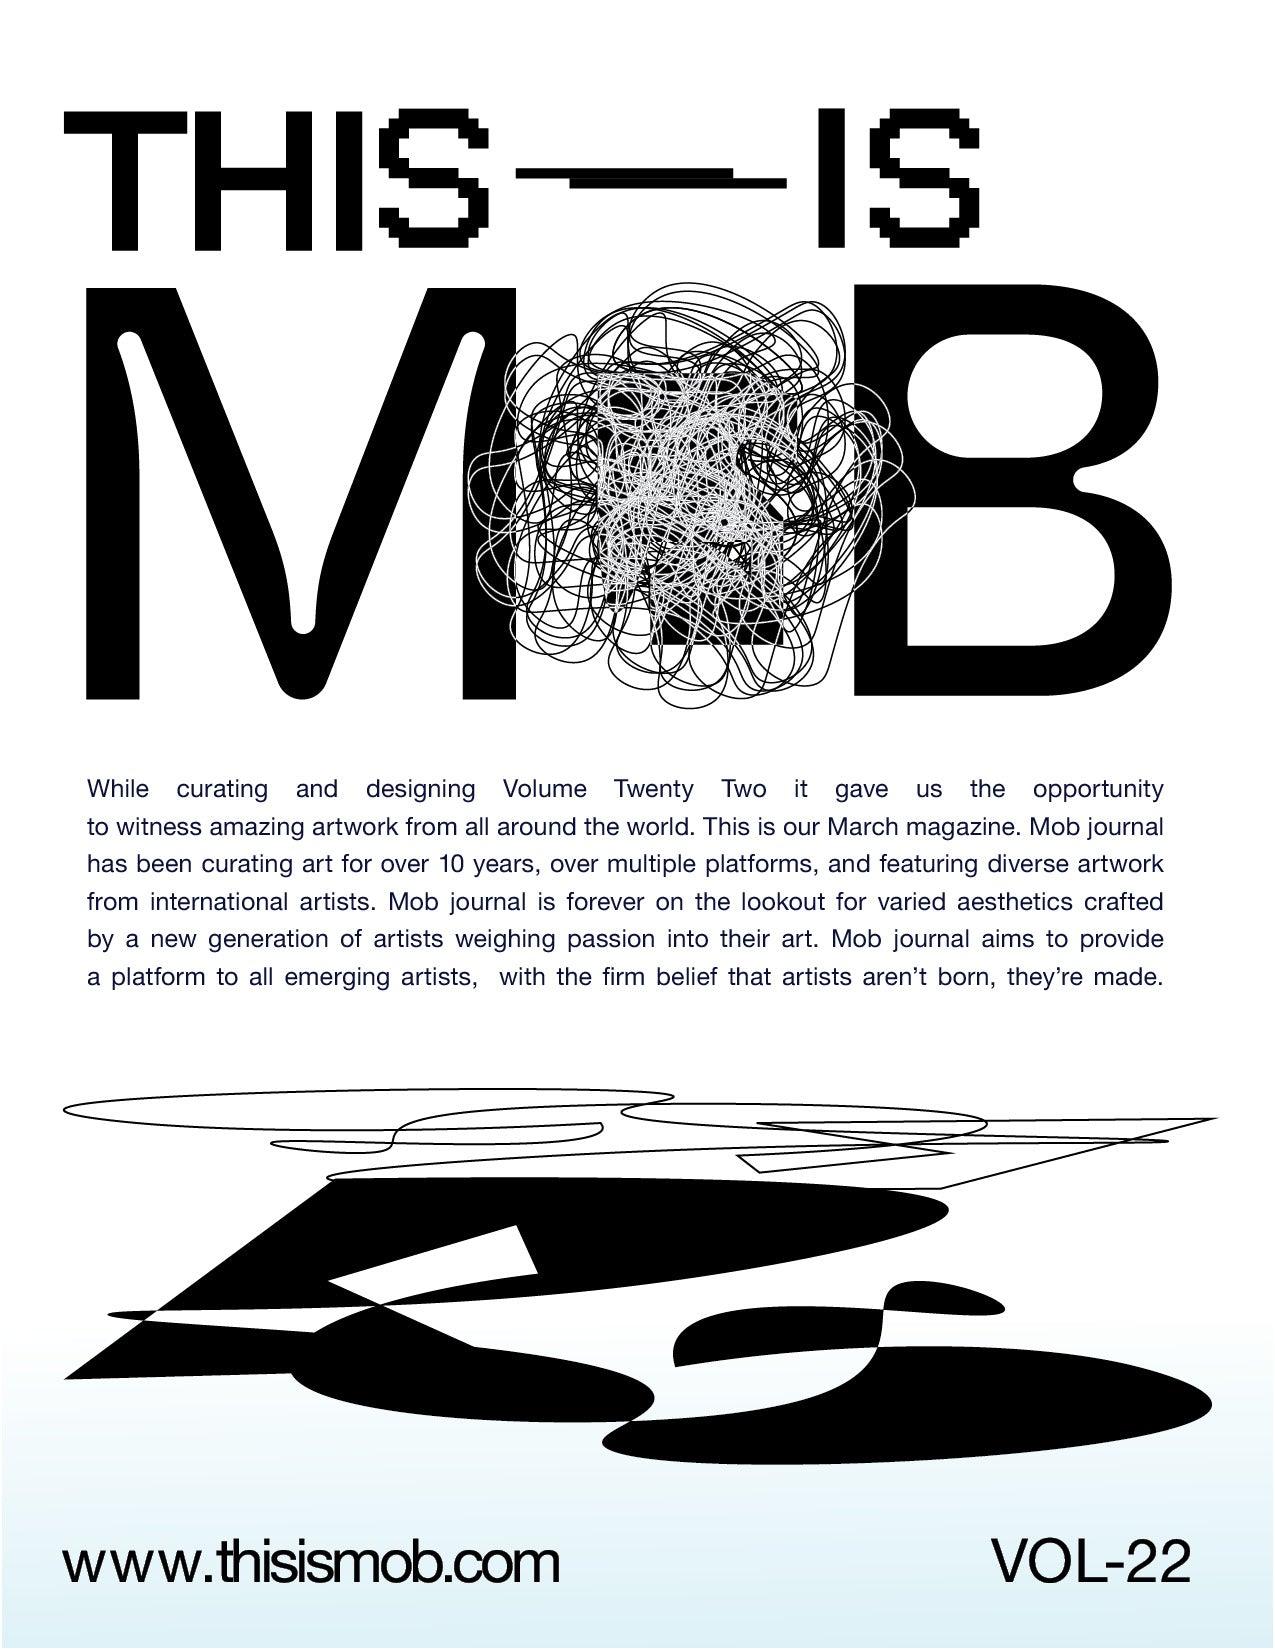 MOB JOURNAL | VOLUME TWENTY TWO | ISSUE #41 - Mob Journal